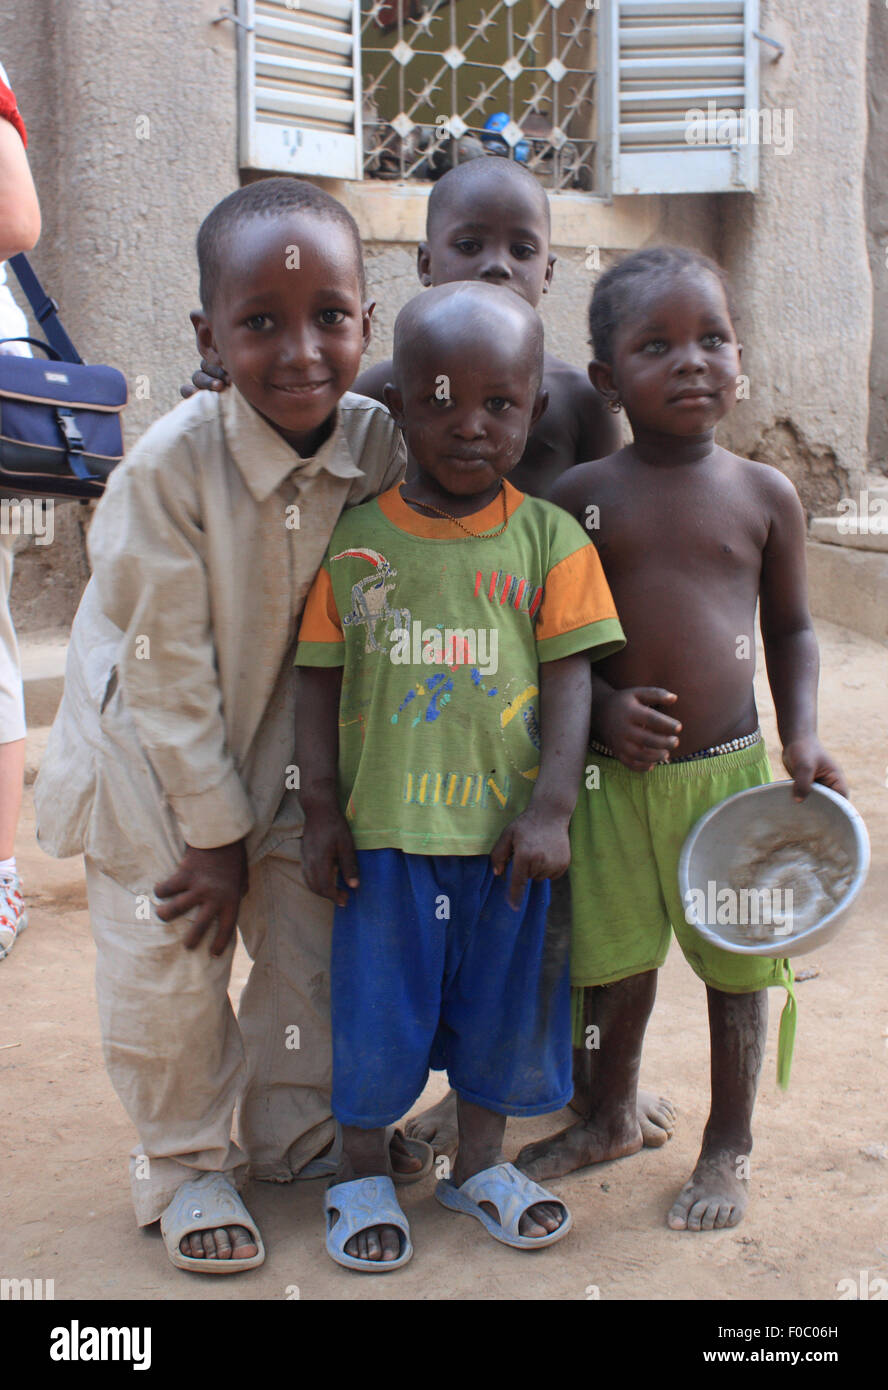 BANDIAGARA, MALI - OCTOBER 3, 2008:  Unidentified group of children in bandiagara in the Mopti region in Mali on october 3, 2008 Stock Photo